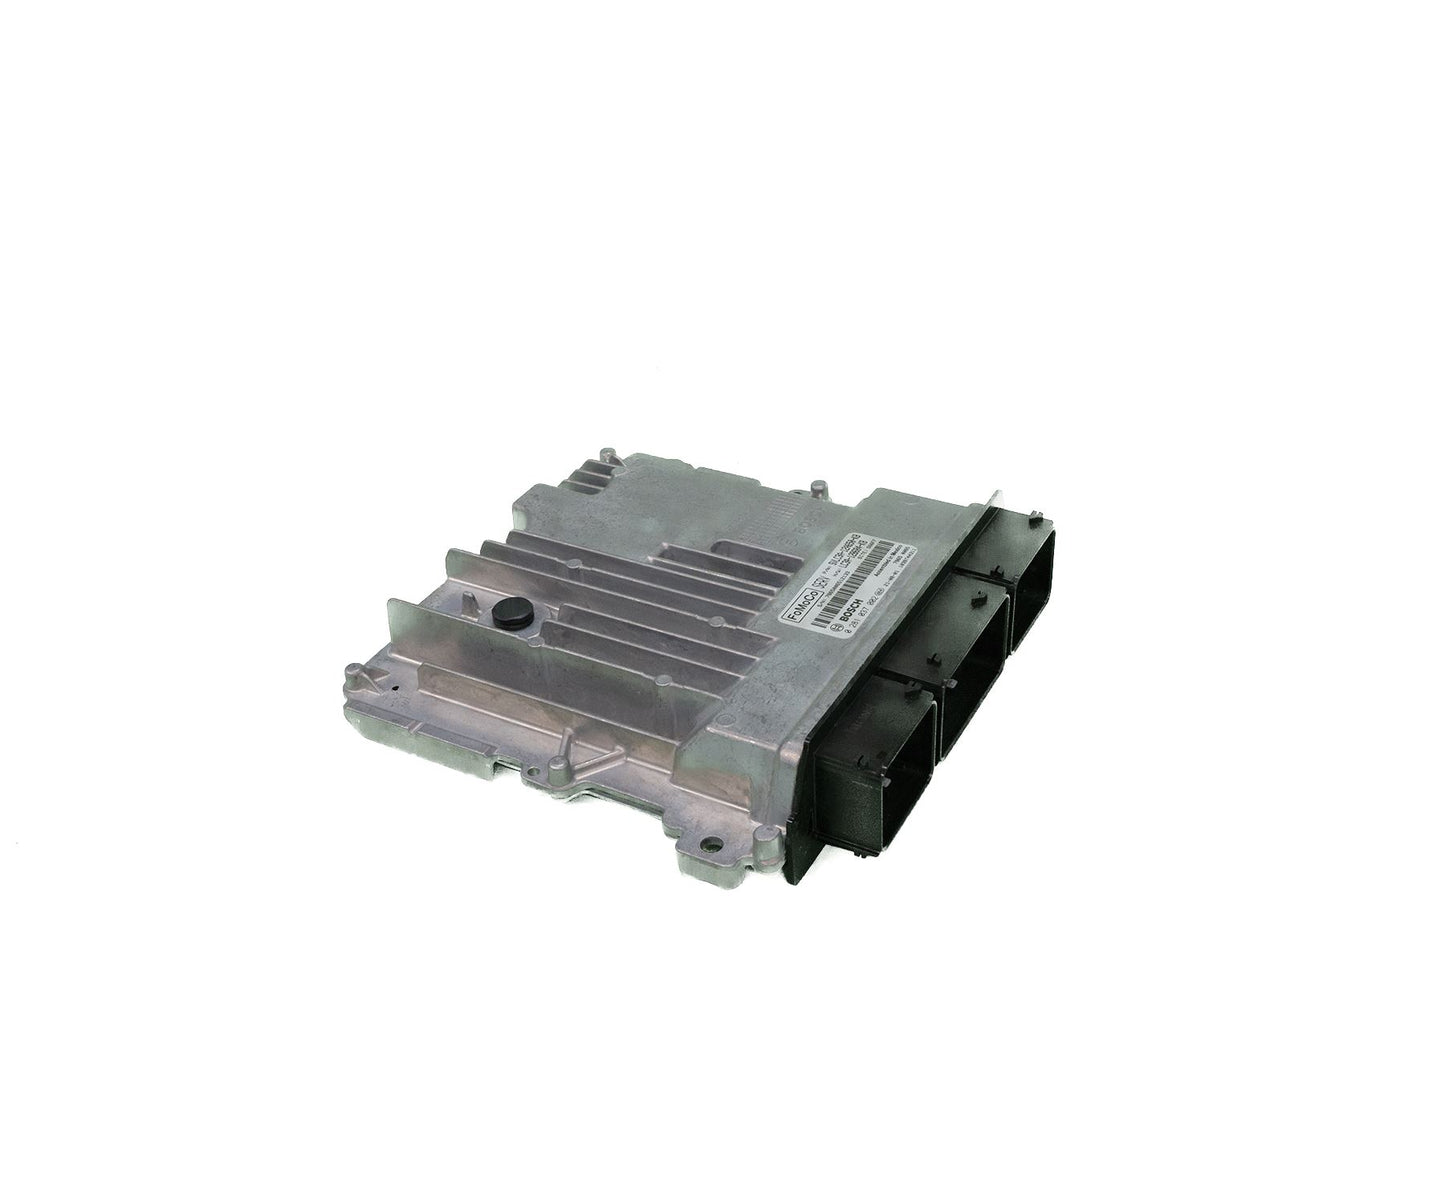 Motorcraft Engine Control Module - Unlocked (ECM) (2020-2022 Powerstroke 6.7L) Hardware DIESELR Tuning 